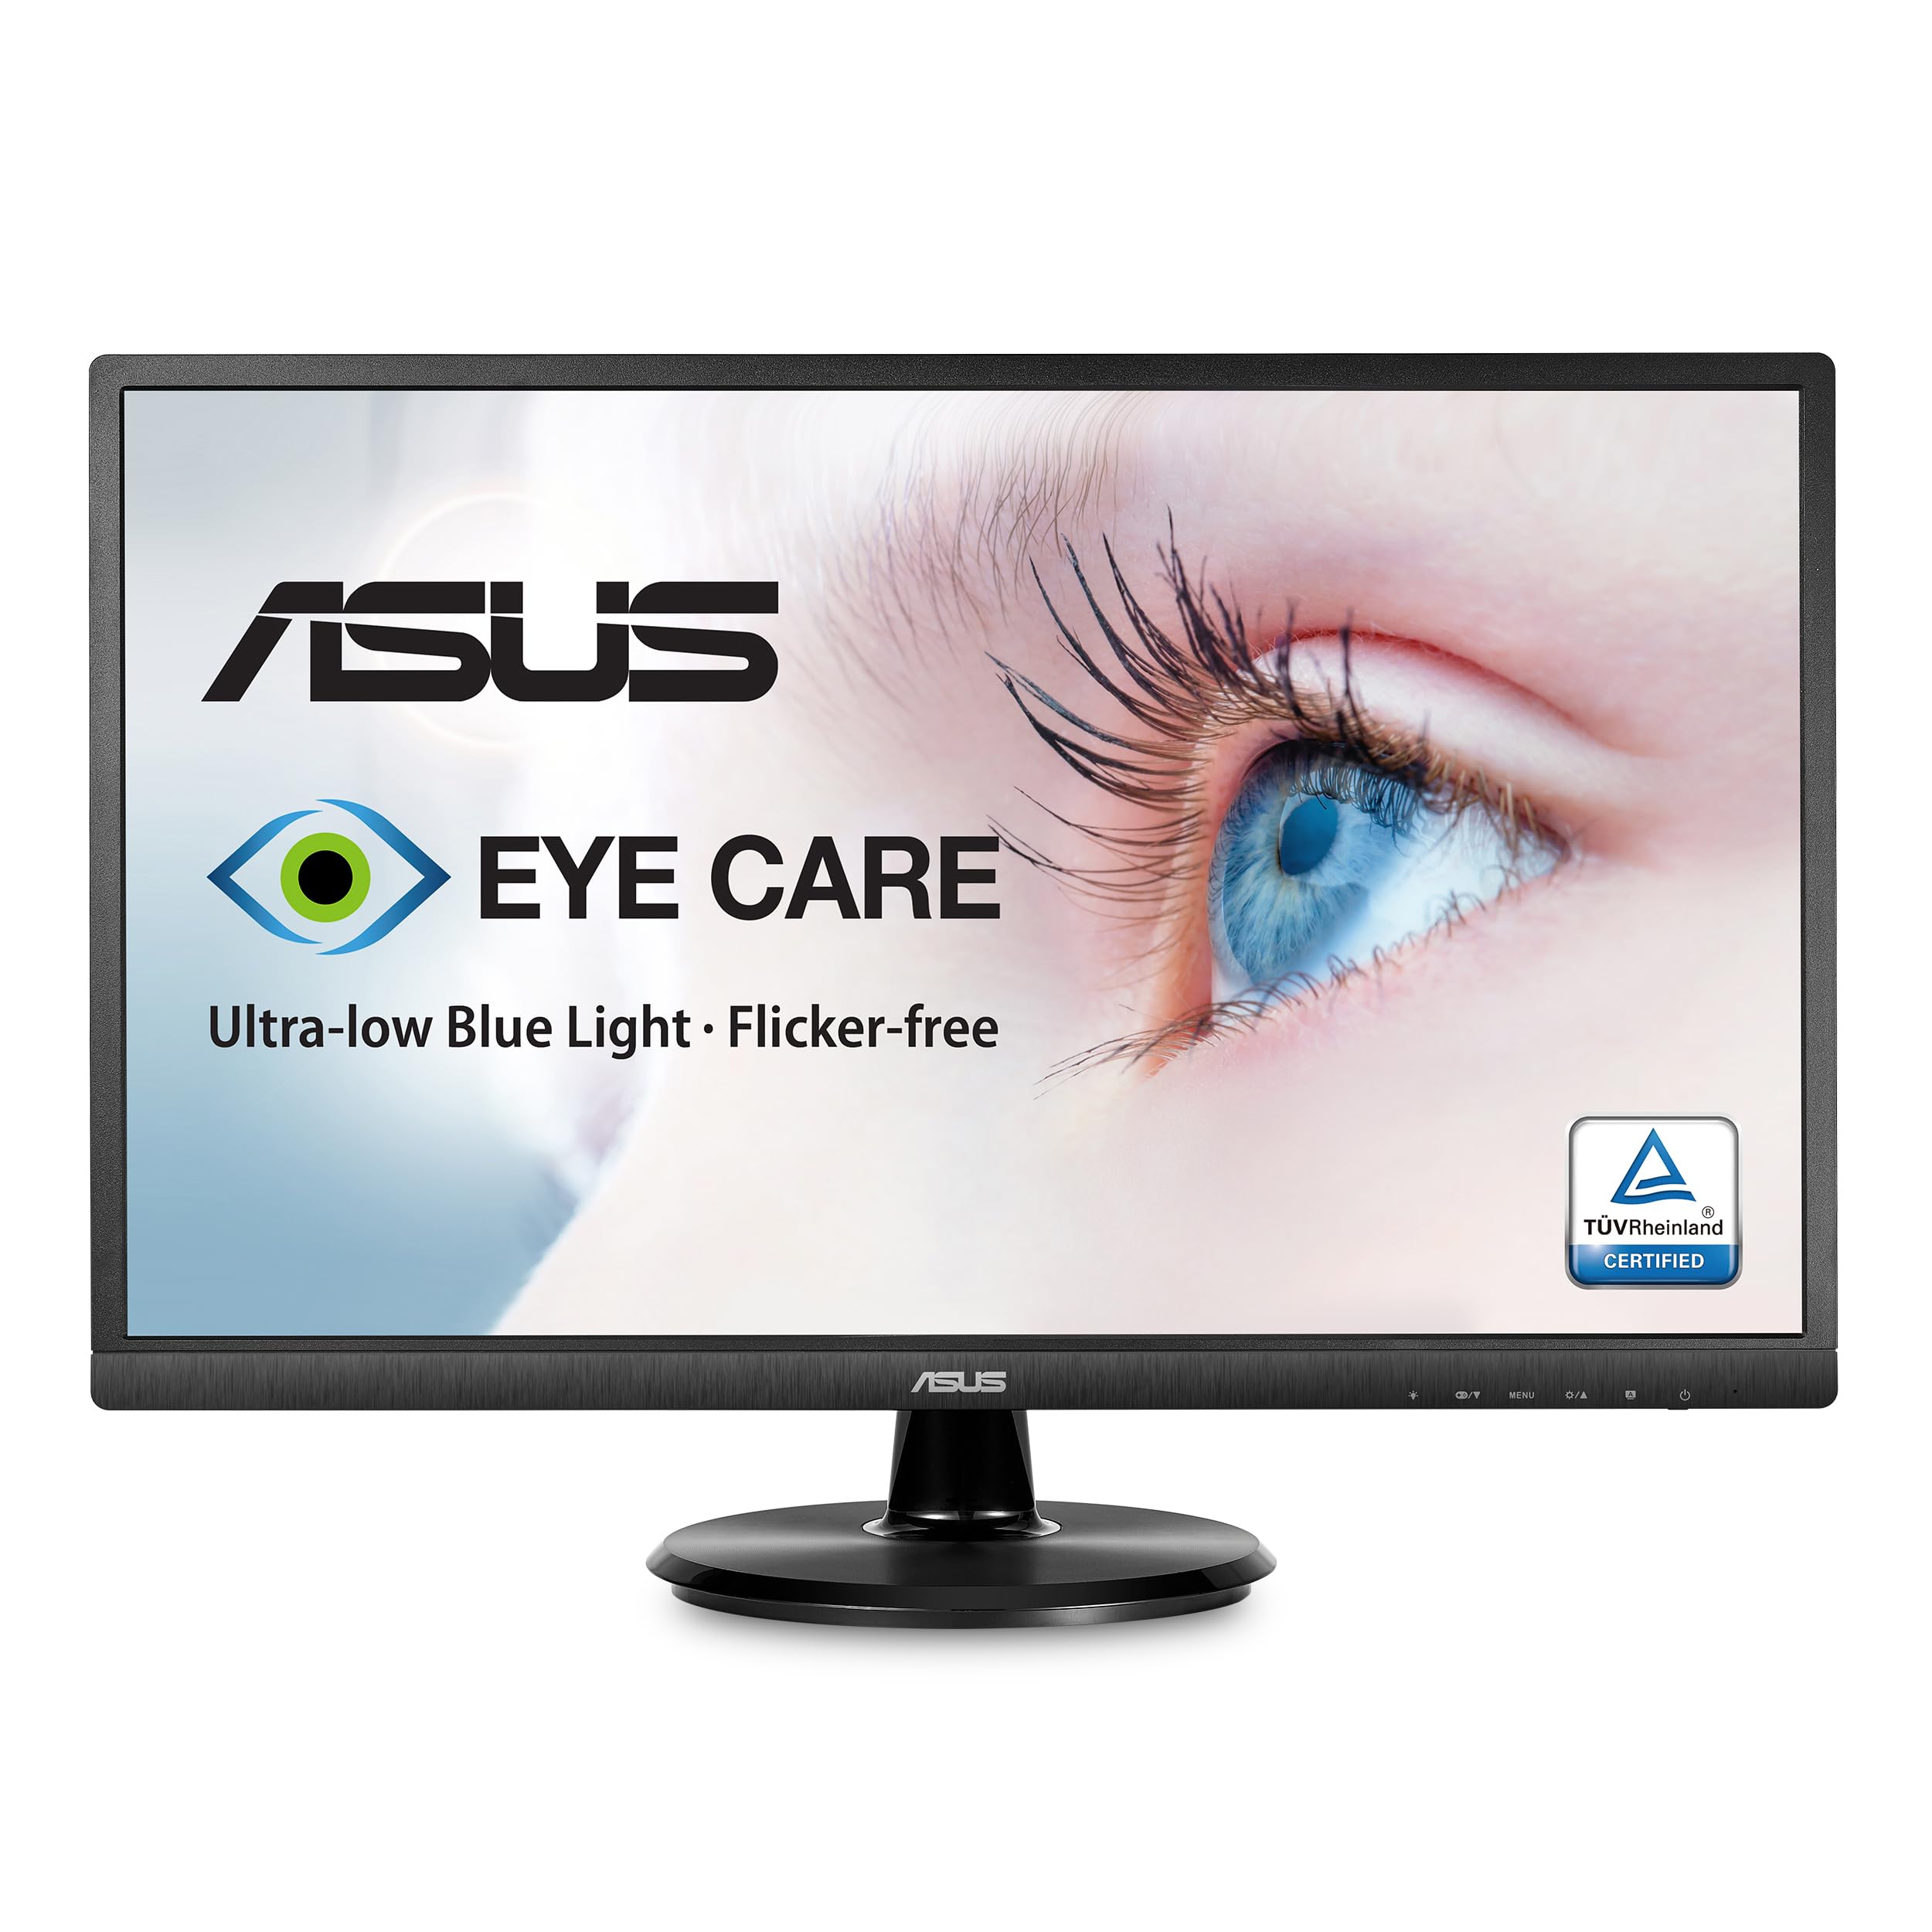 VA249HE/ASUS Eye Care Monitor - 23.8 inch, Full HD, Flicker Free, Blue Light Filter, Anti Glare, HDM Monitor / Black / 23.8 INCHES